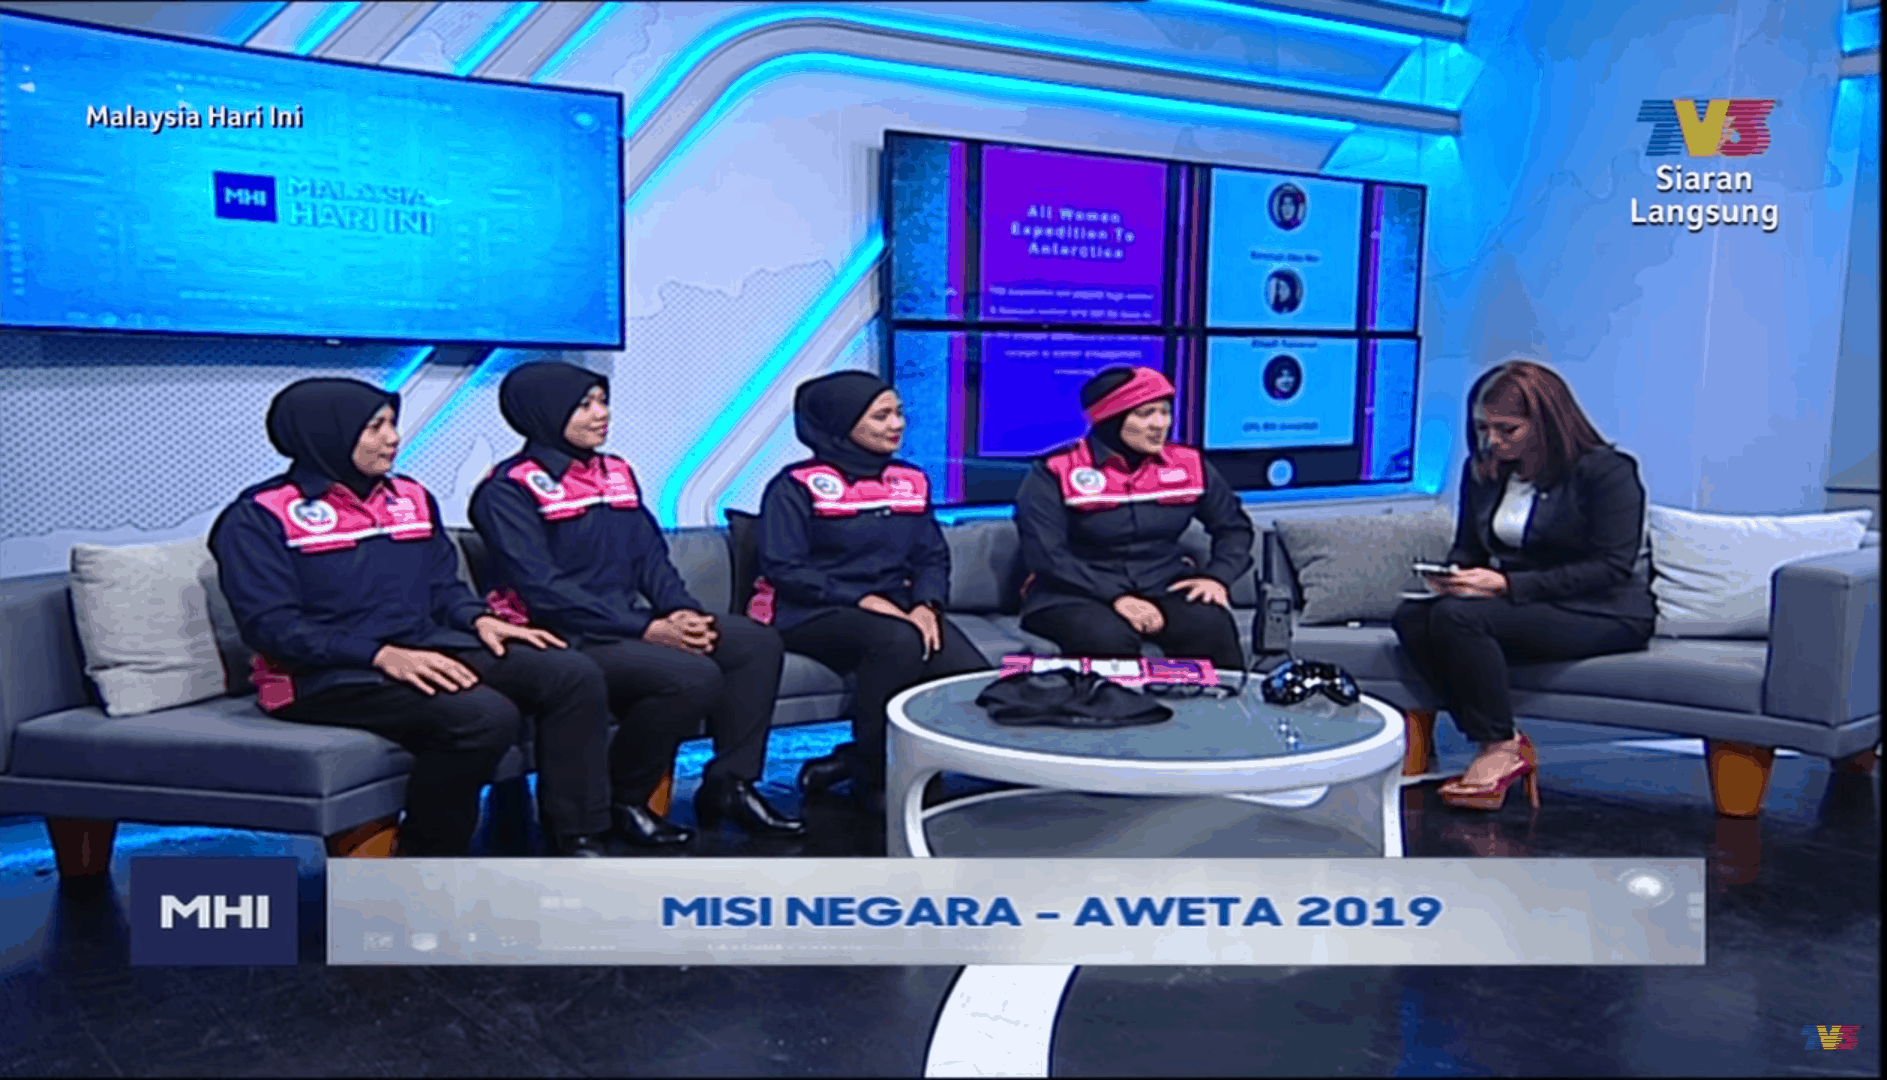 AWETA 2019 - Misi Negara | MHI (27 November 2019)